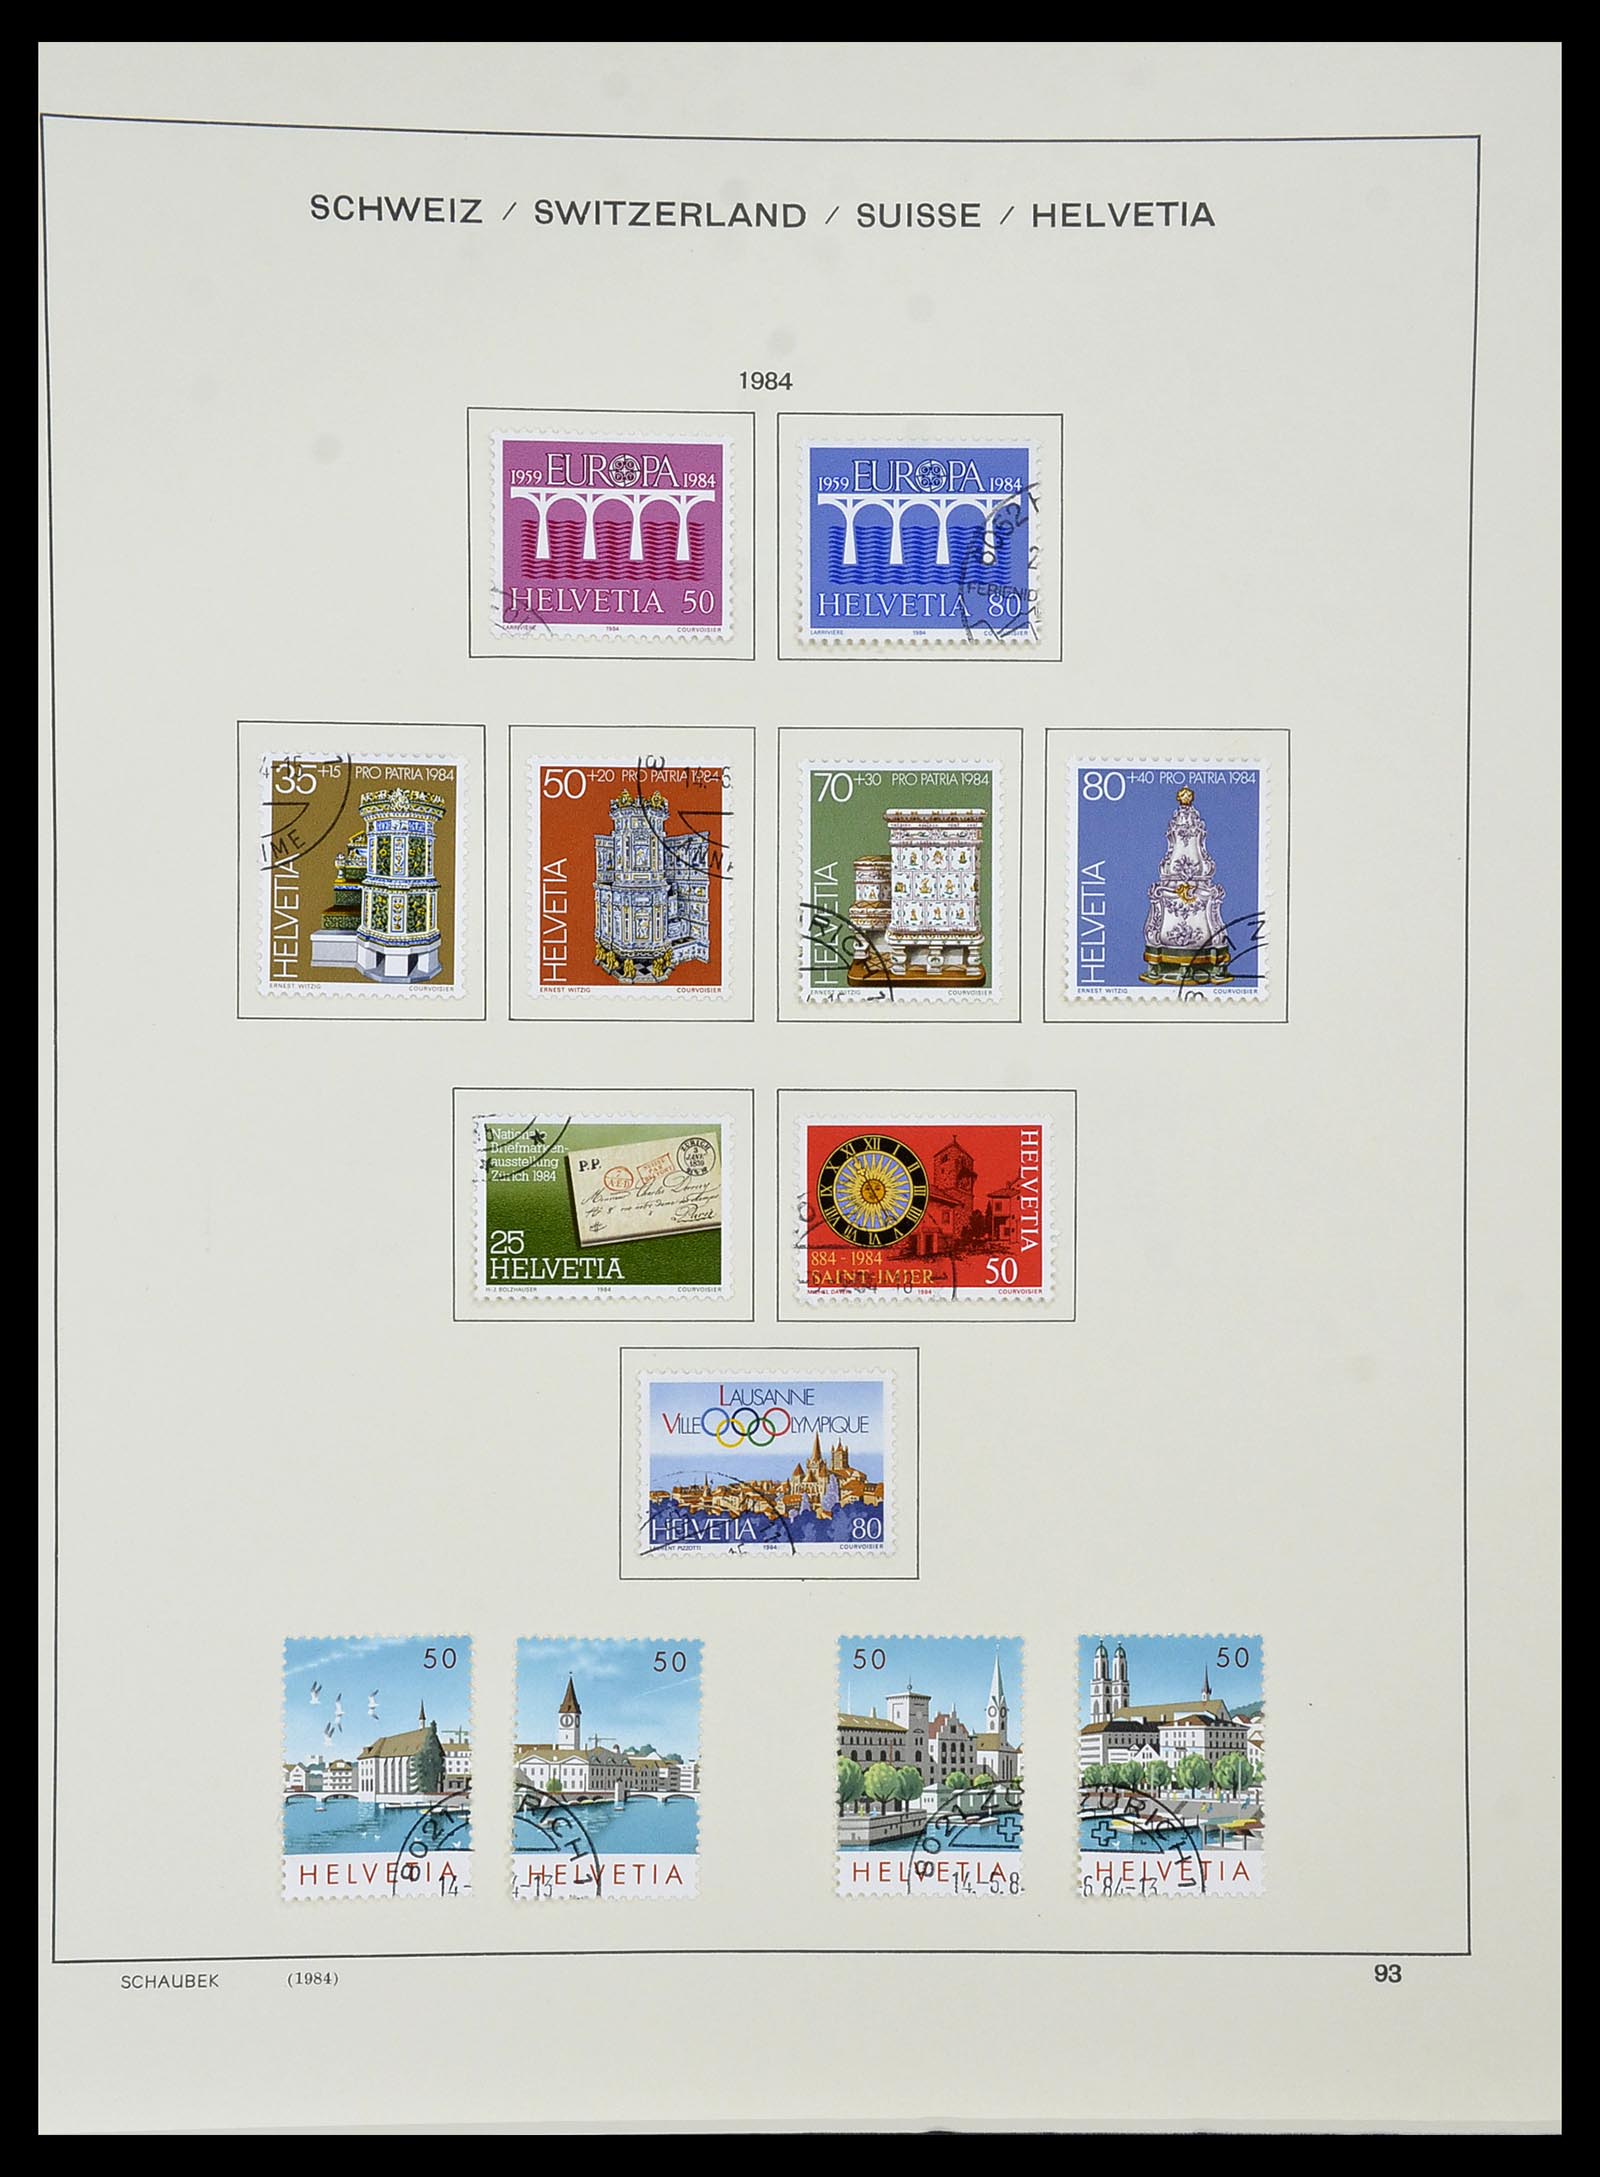 34436 095 - Stamp Collection 34436 Switzerland 1854-2016.